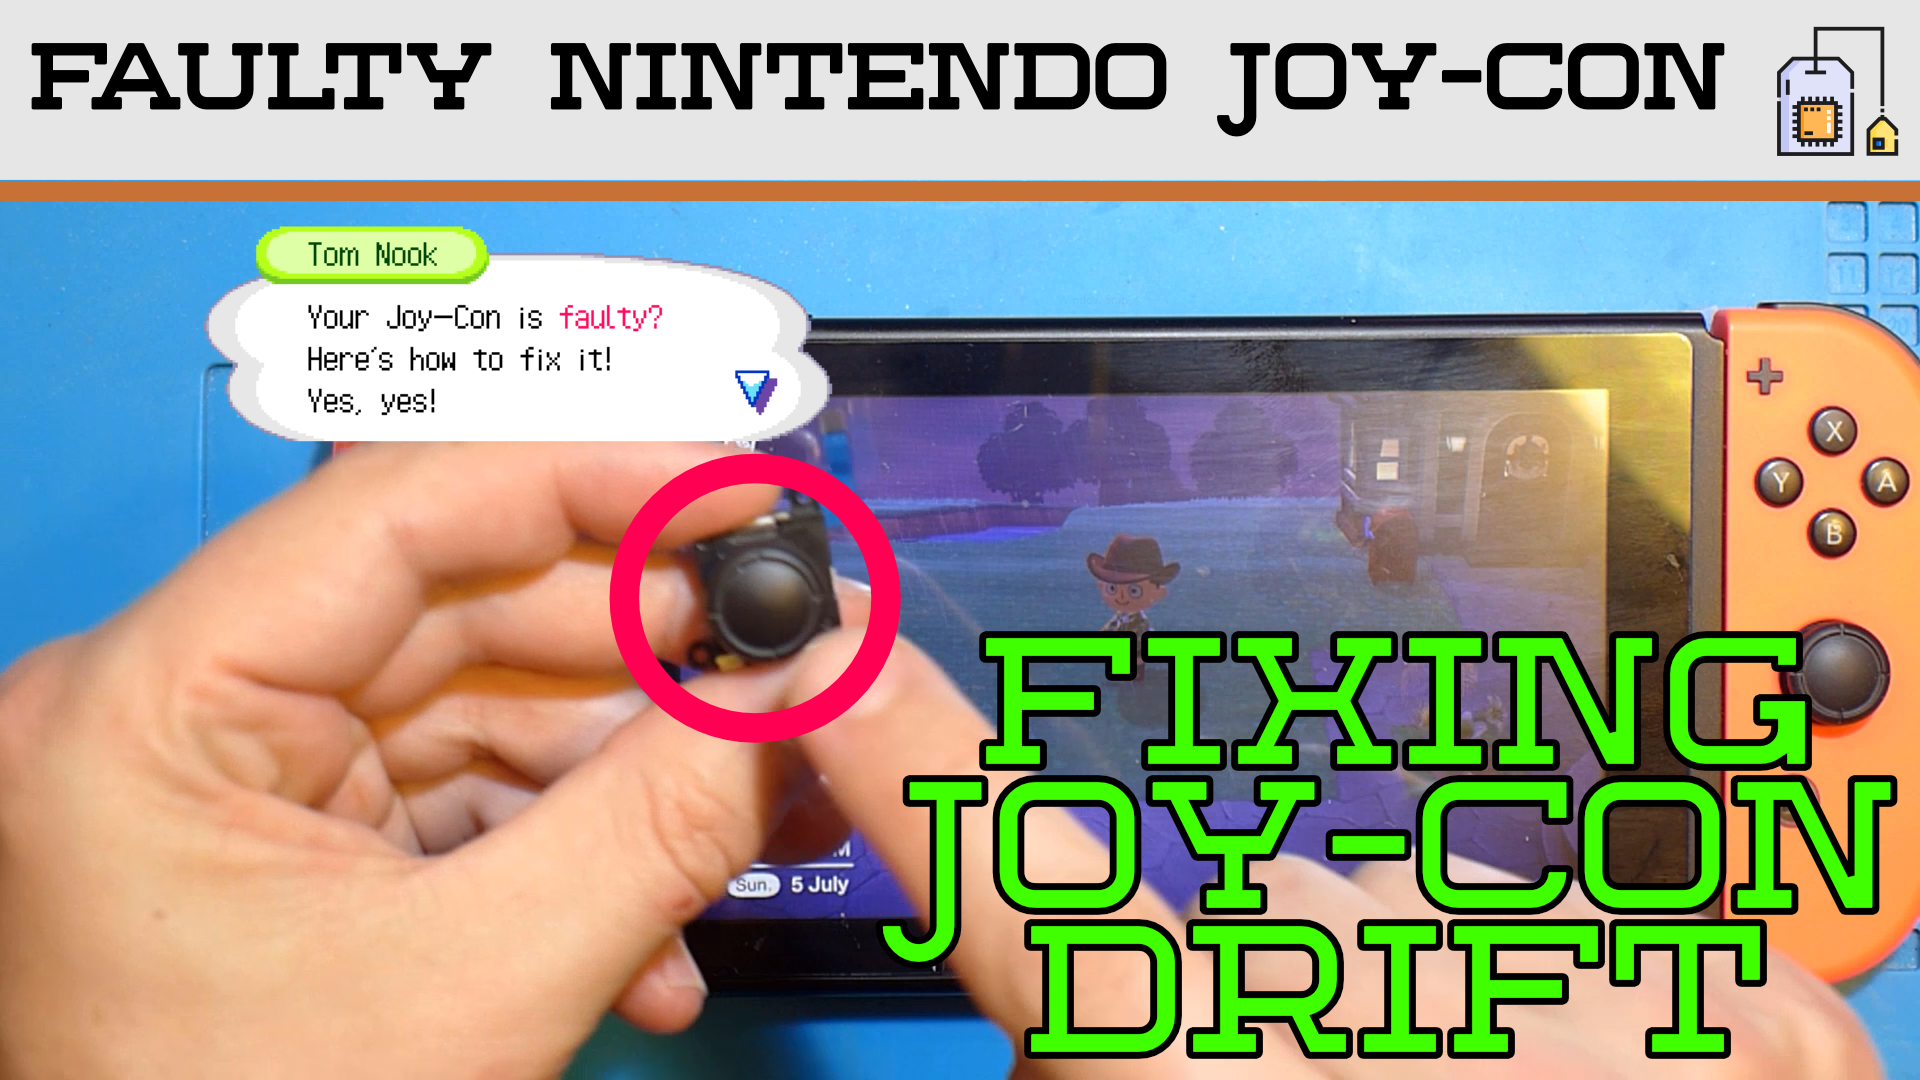 Switch Joycon Drift Repair